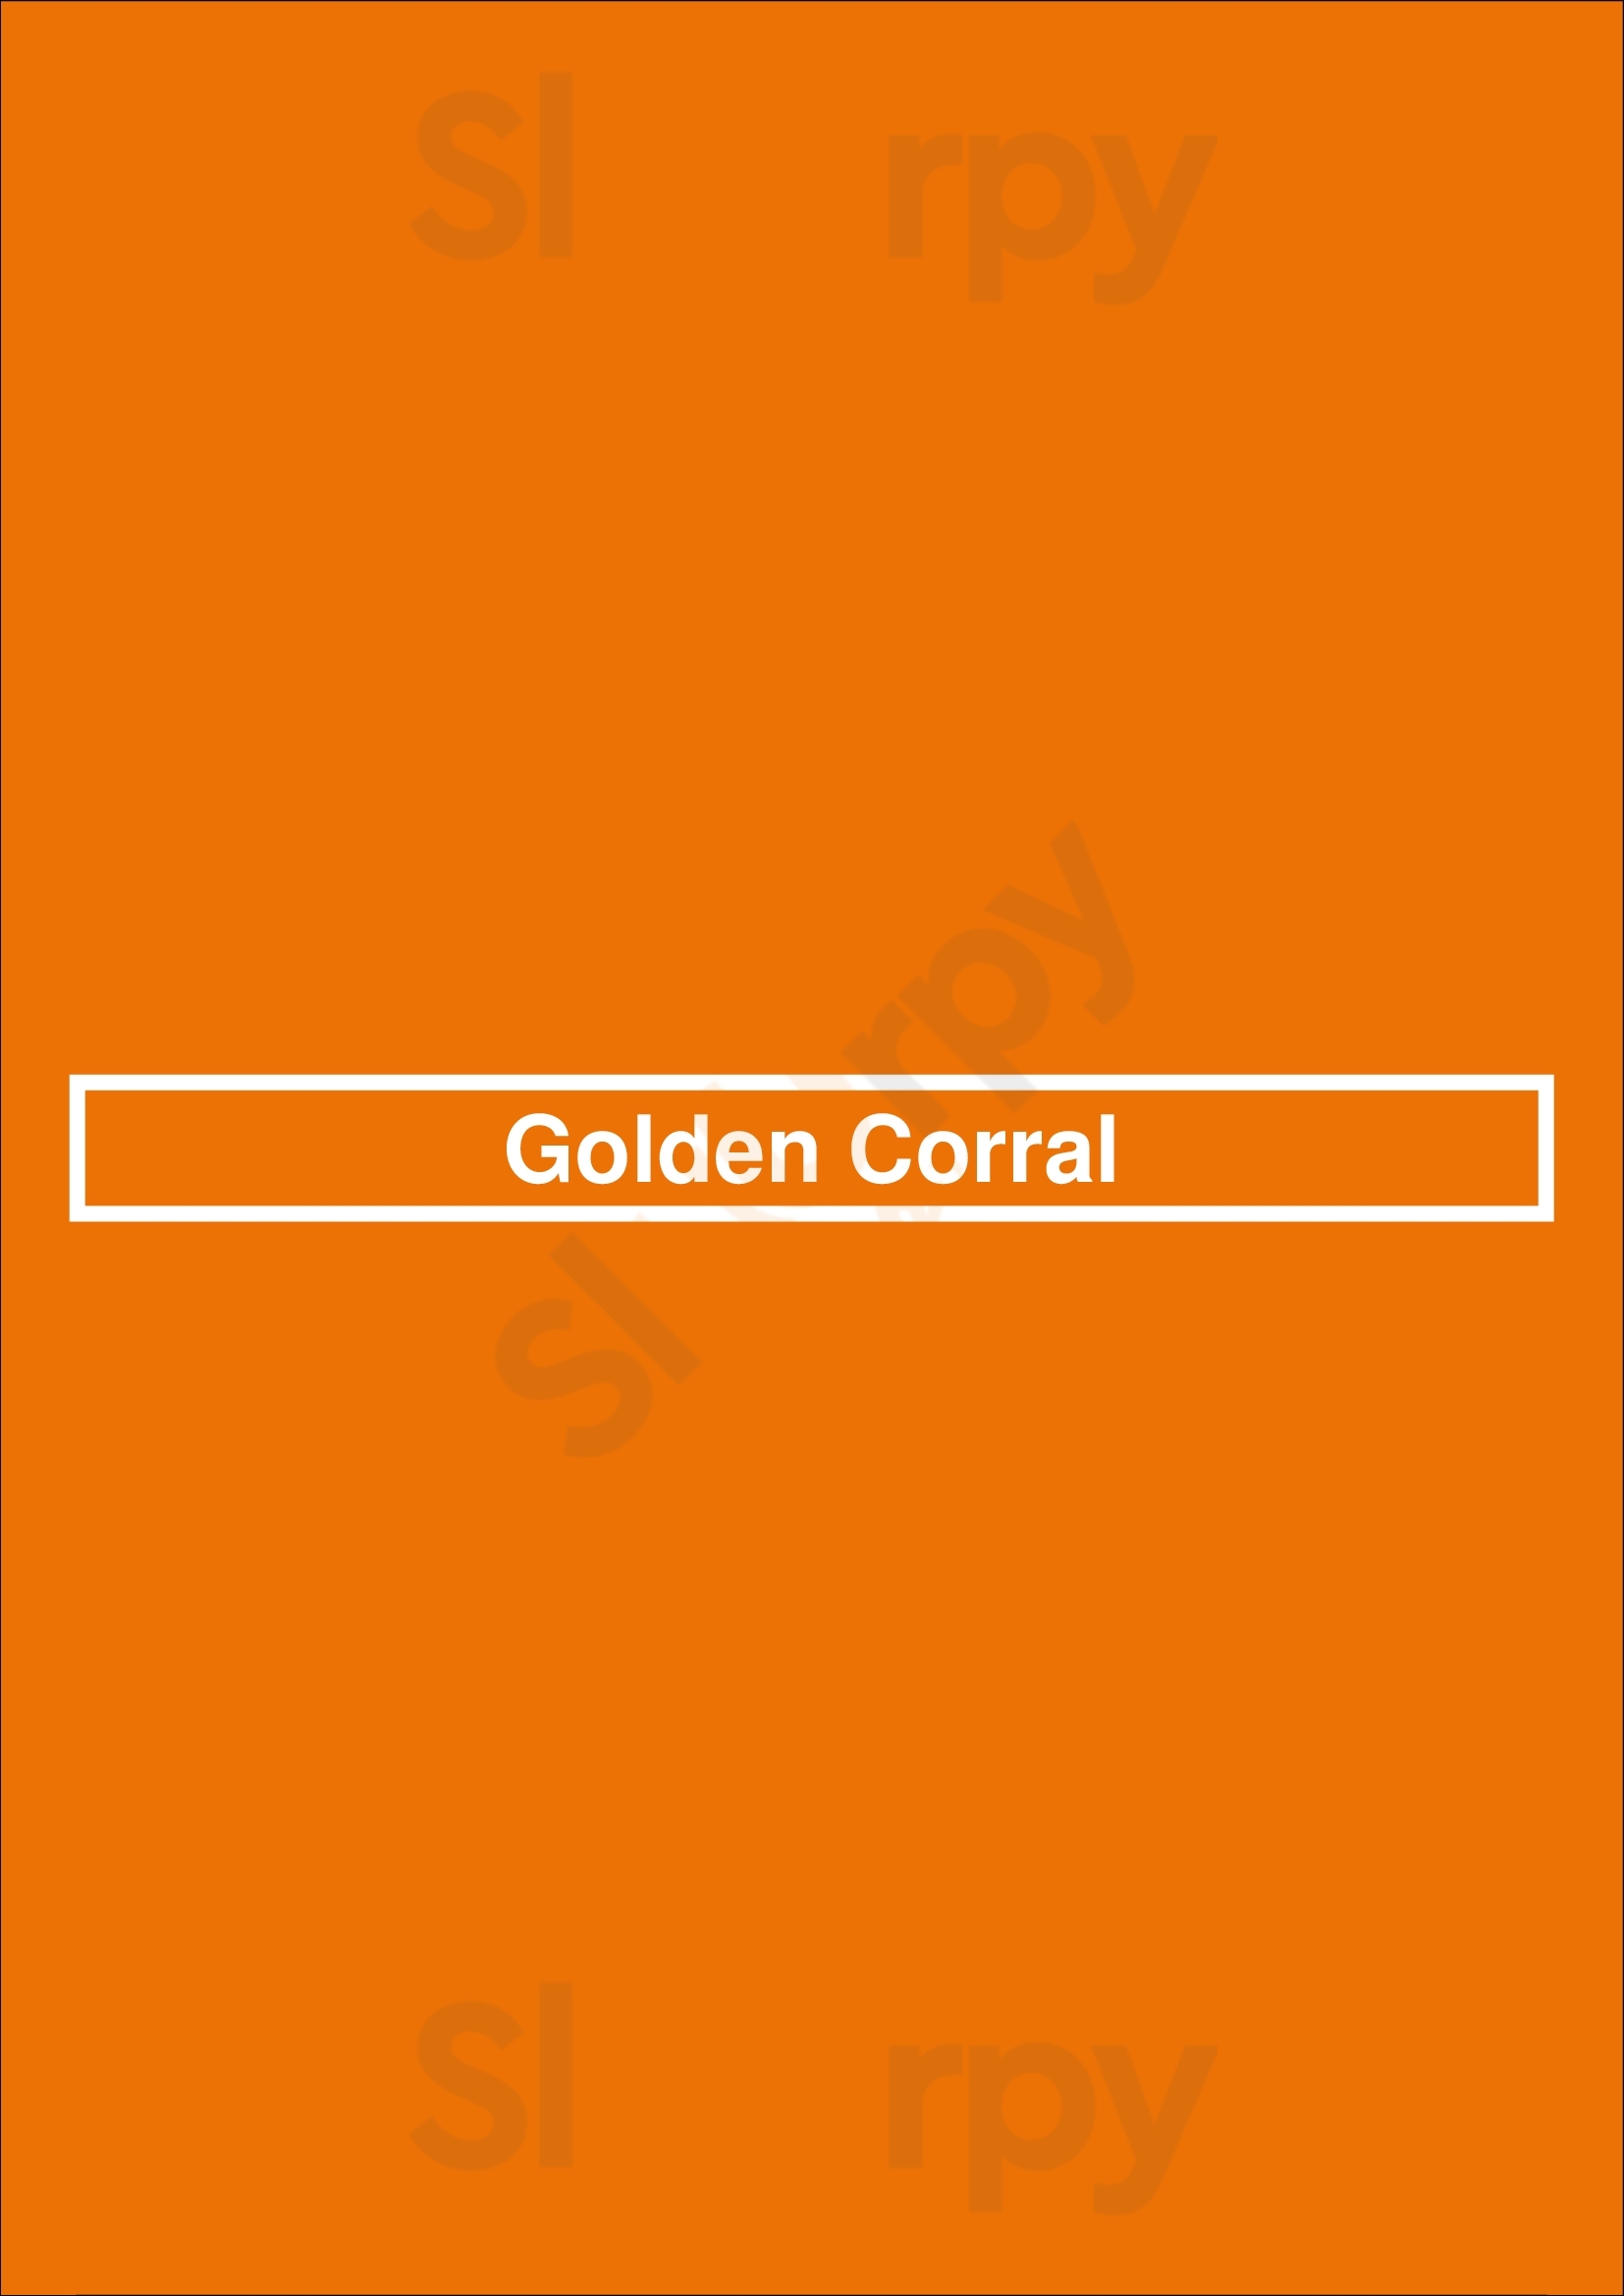 Golden Corral Dallas Menu - 1